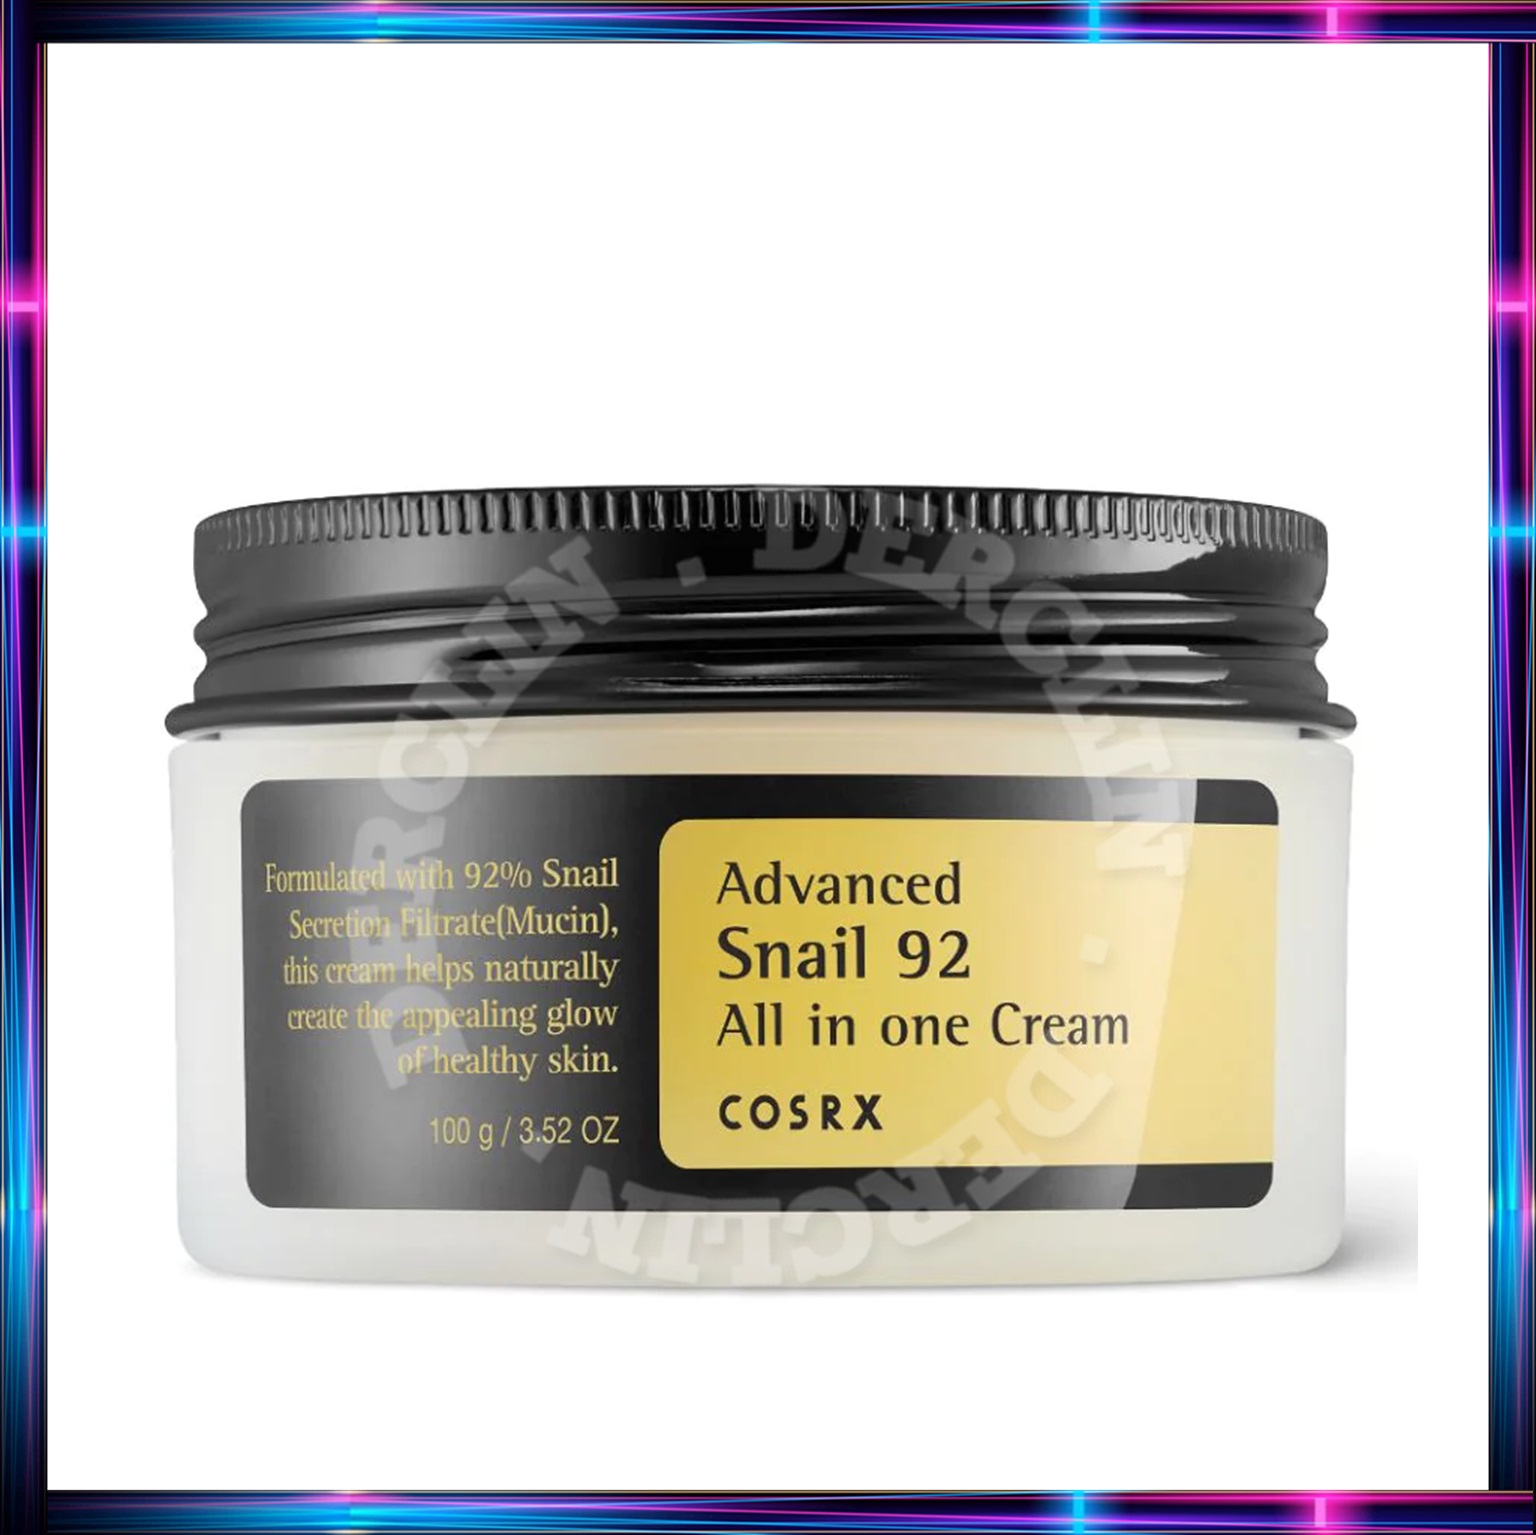 COSRX Advanced Snail Crema